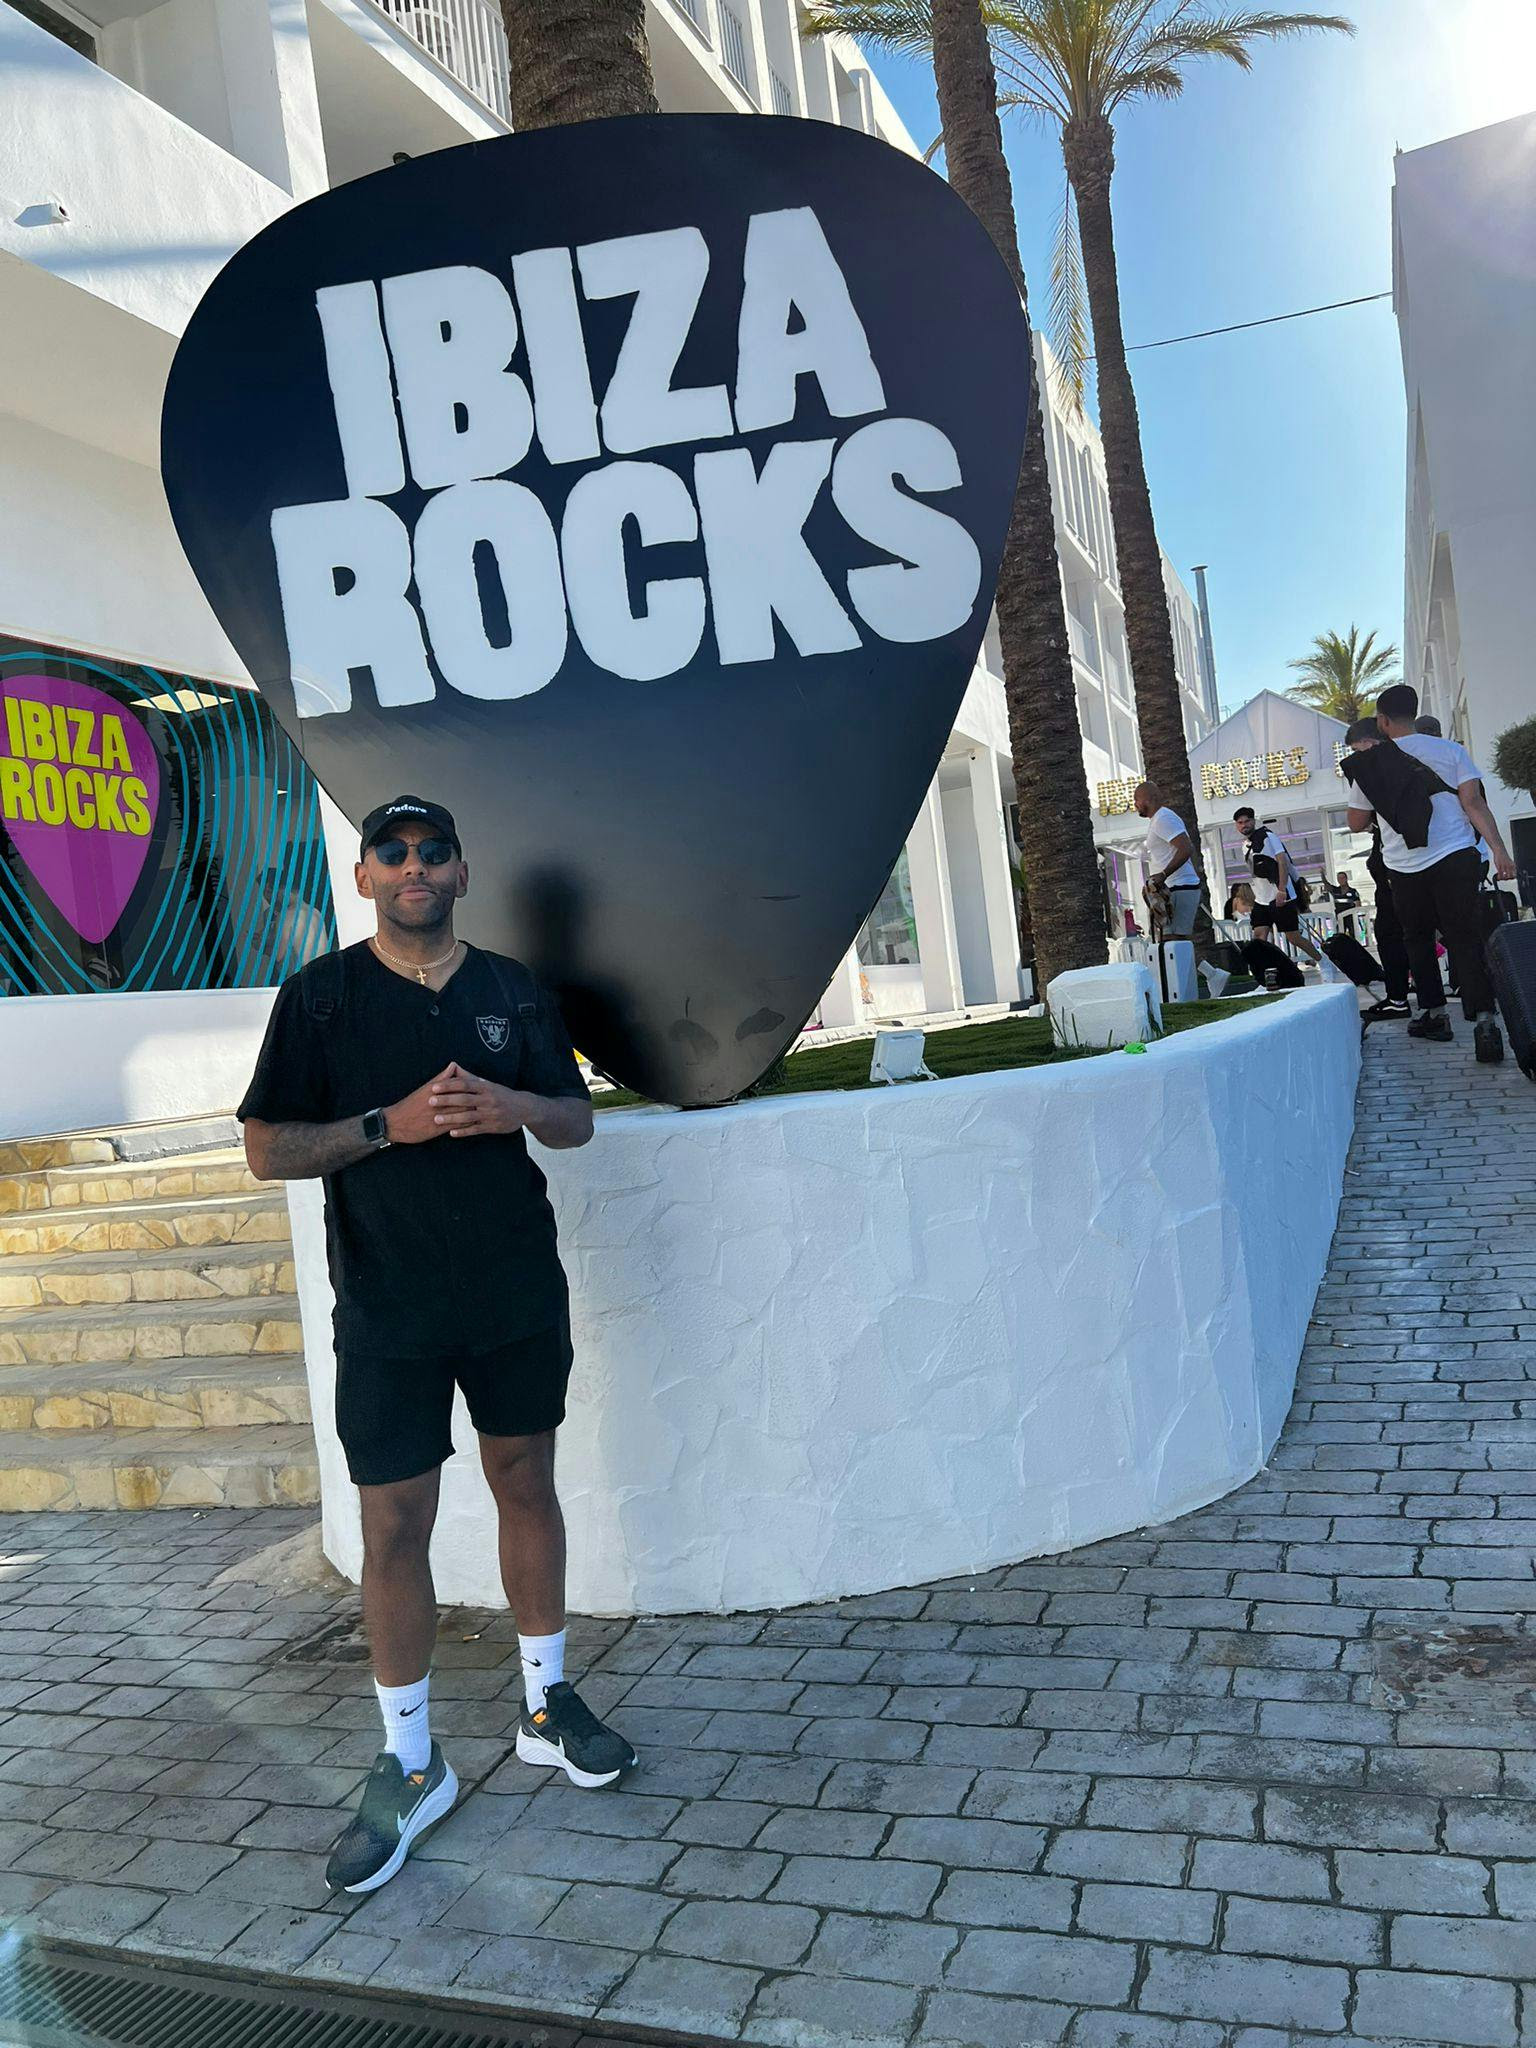 Ibiza rocks Loz